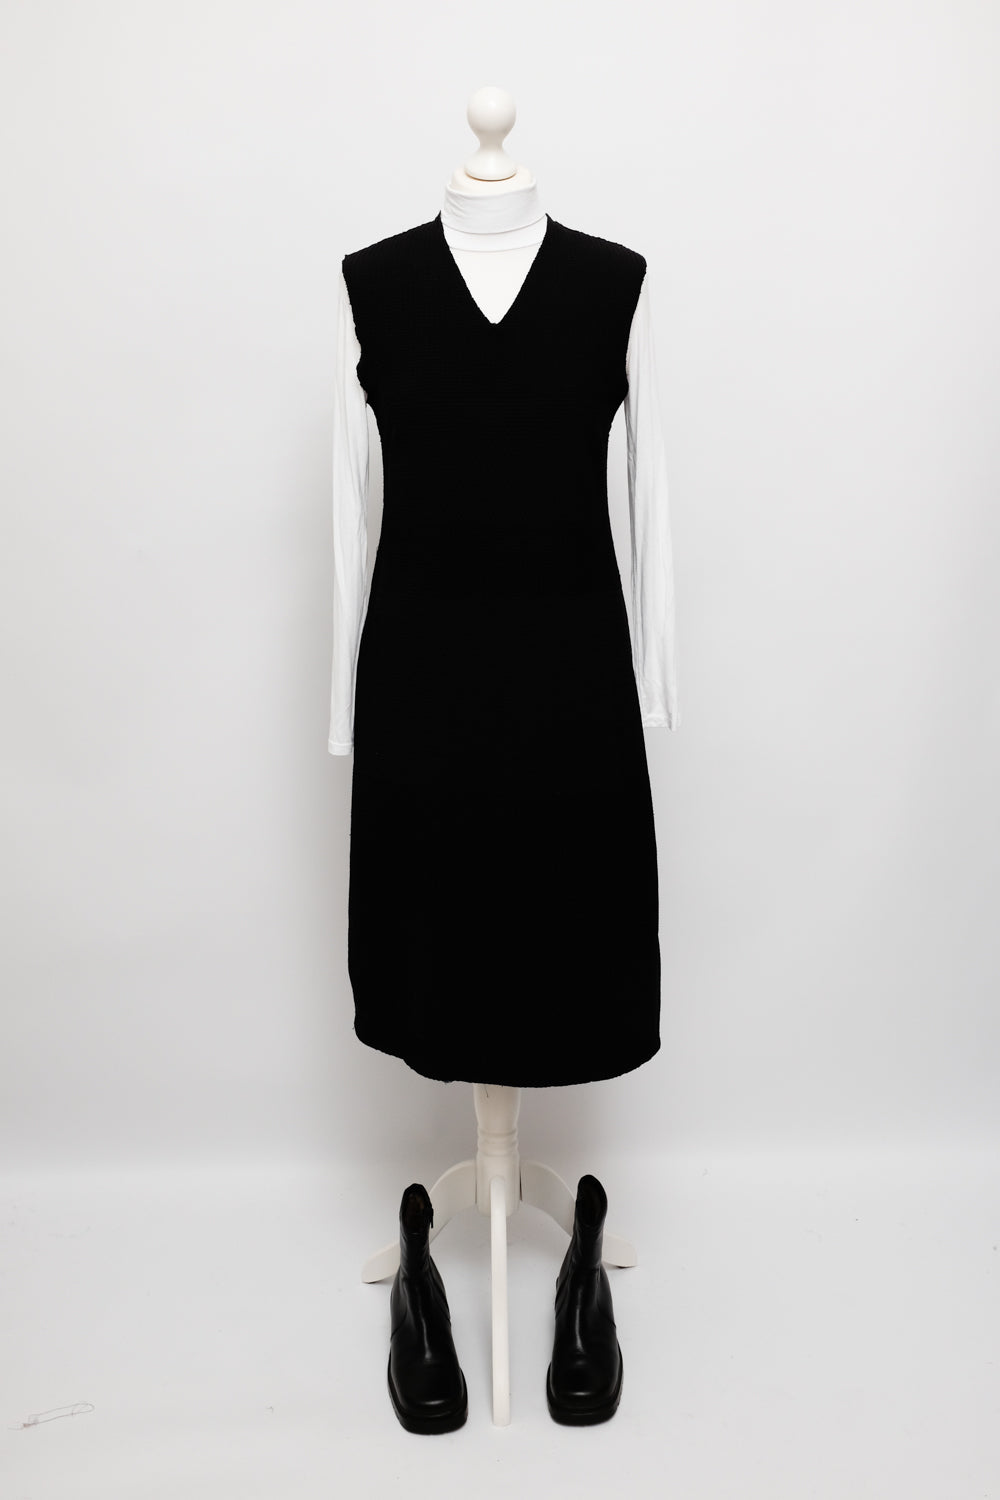 MARITHE FRANCOIS GIRBAUD BLACK ITALY DRESS